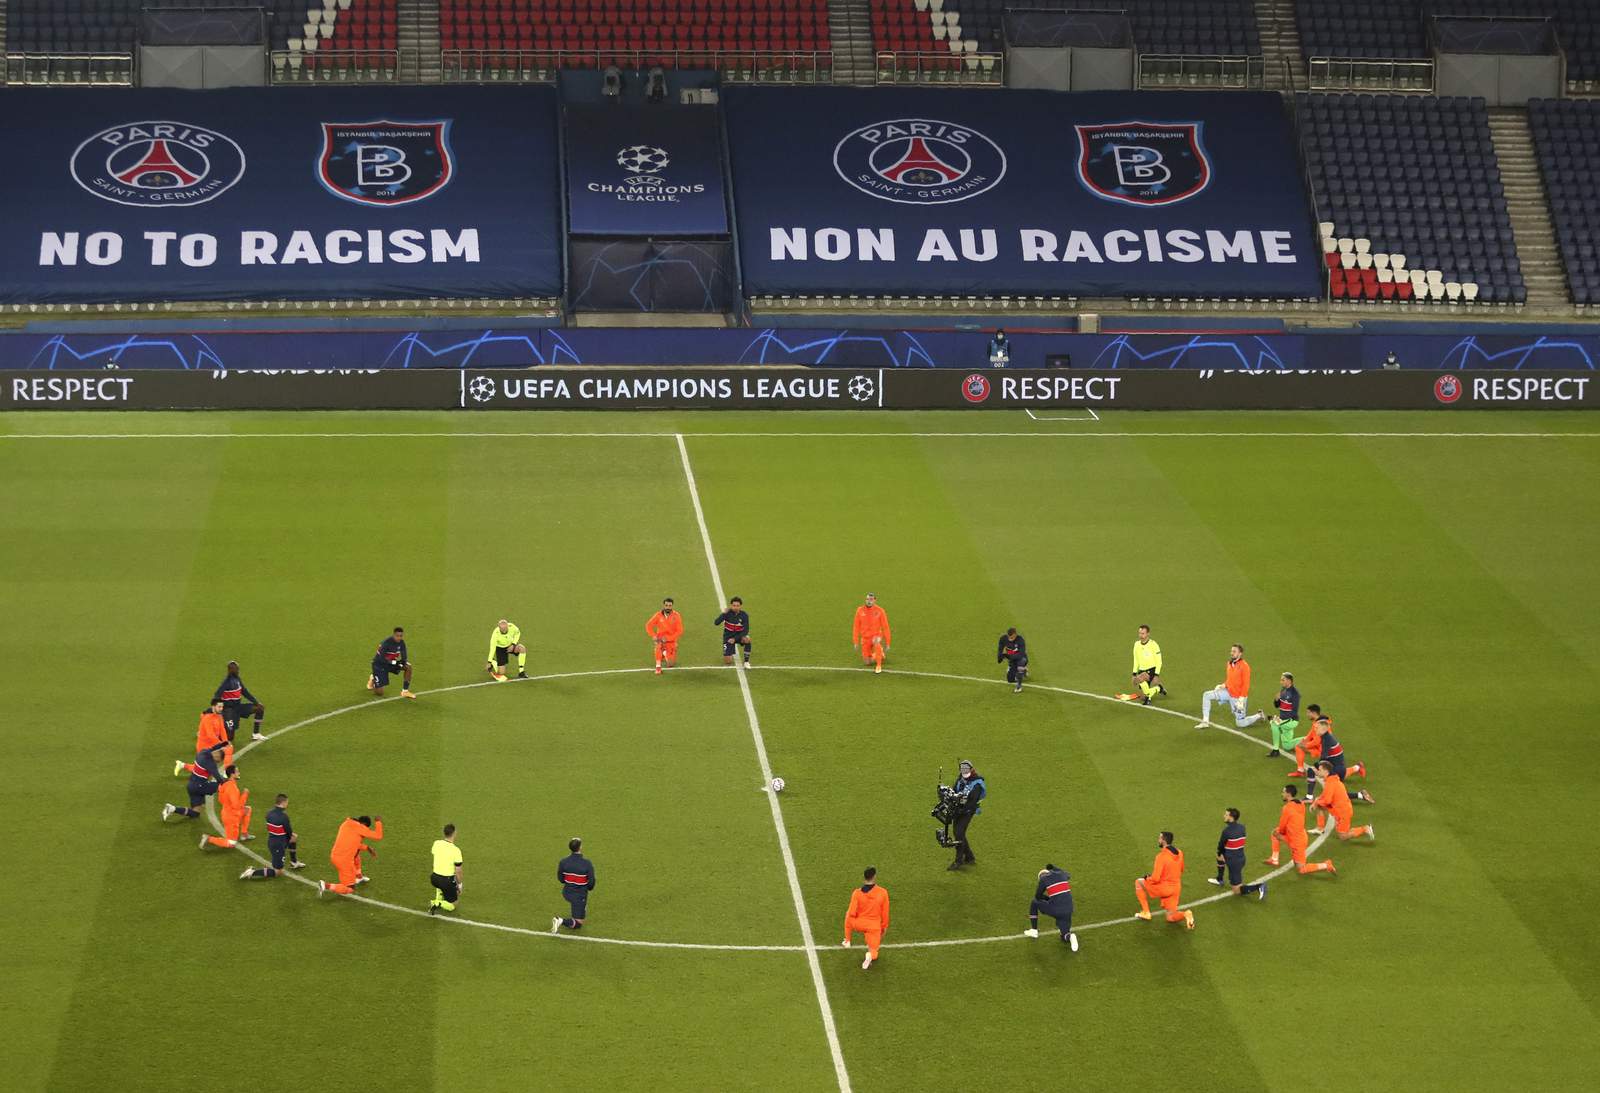 Extraordinary walk off highlights racism in European soccer